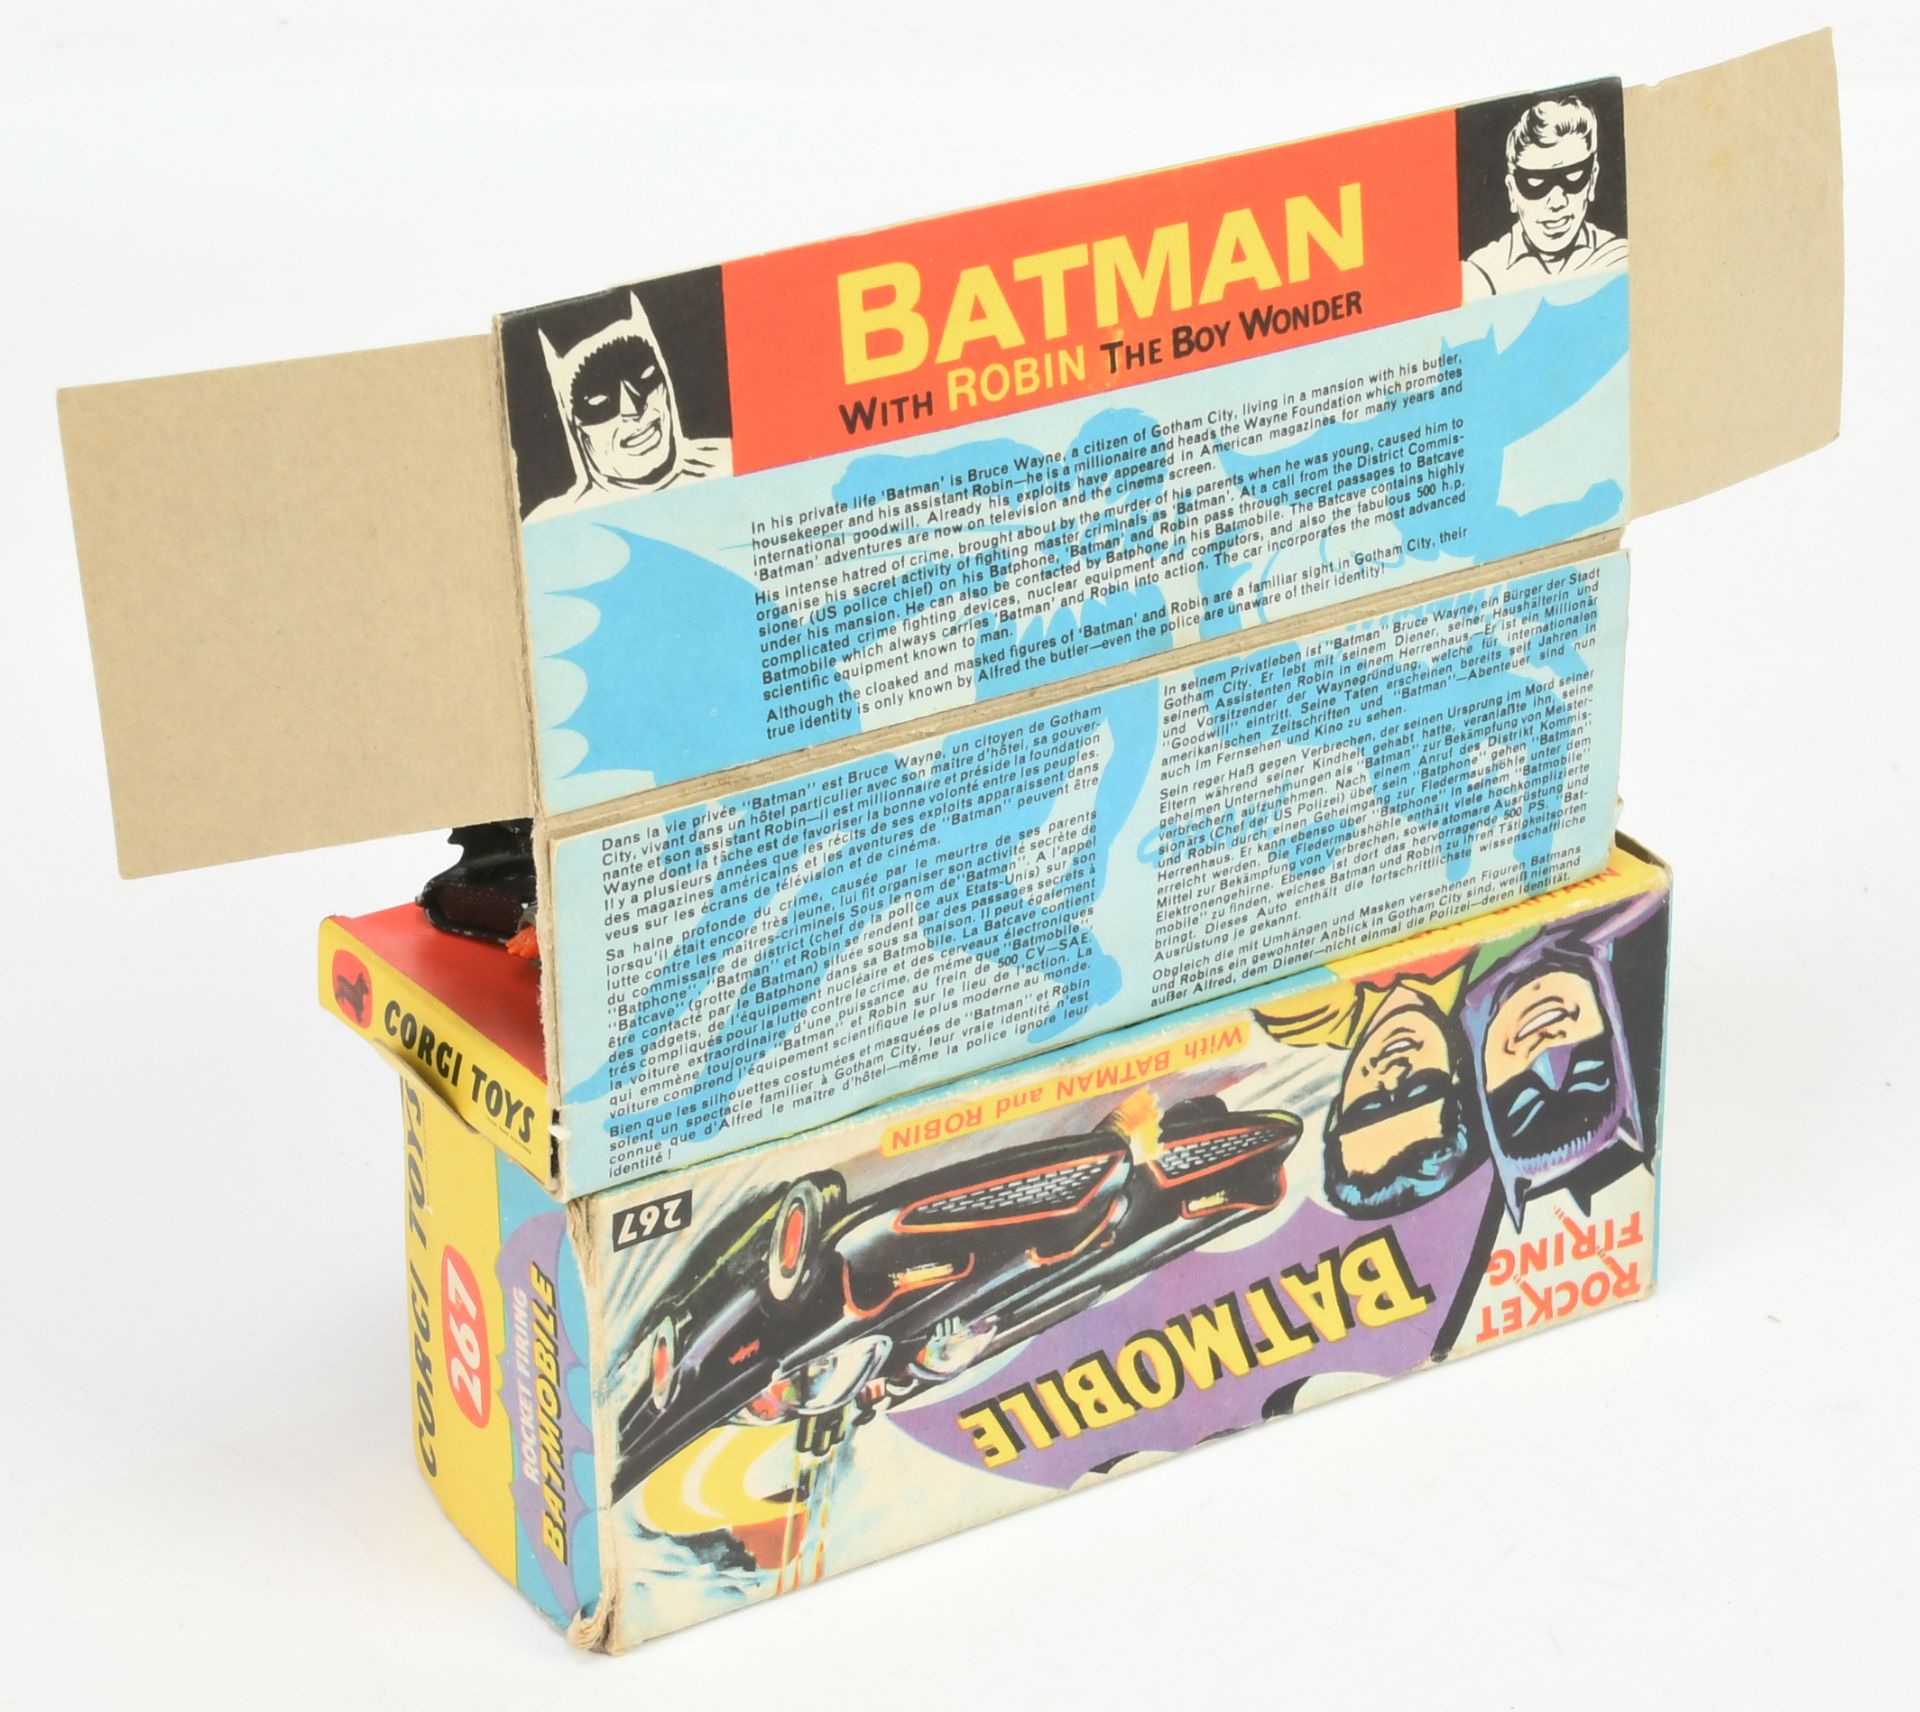 Corgi Toys 267 "Batman" Batmobile - Black body, red bat hubs, blue windows with "Batman & robin" ... - Image 2 of 2